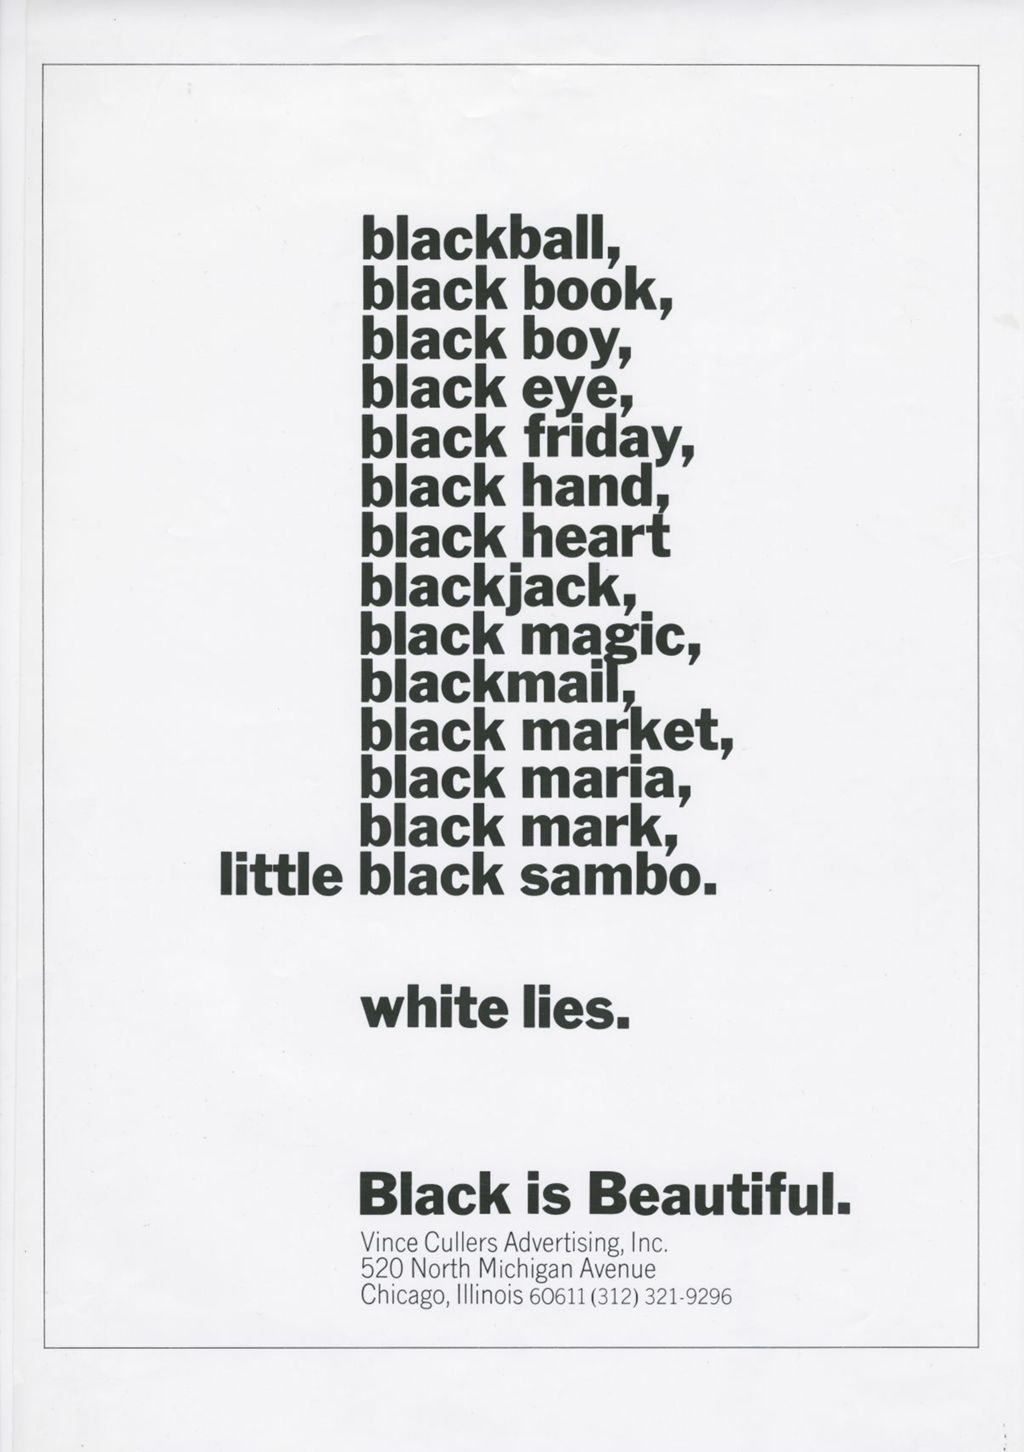 Miniature of Black is Beautiful advertisement